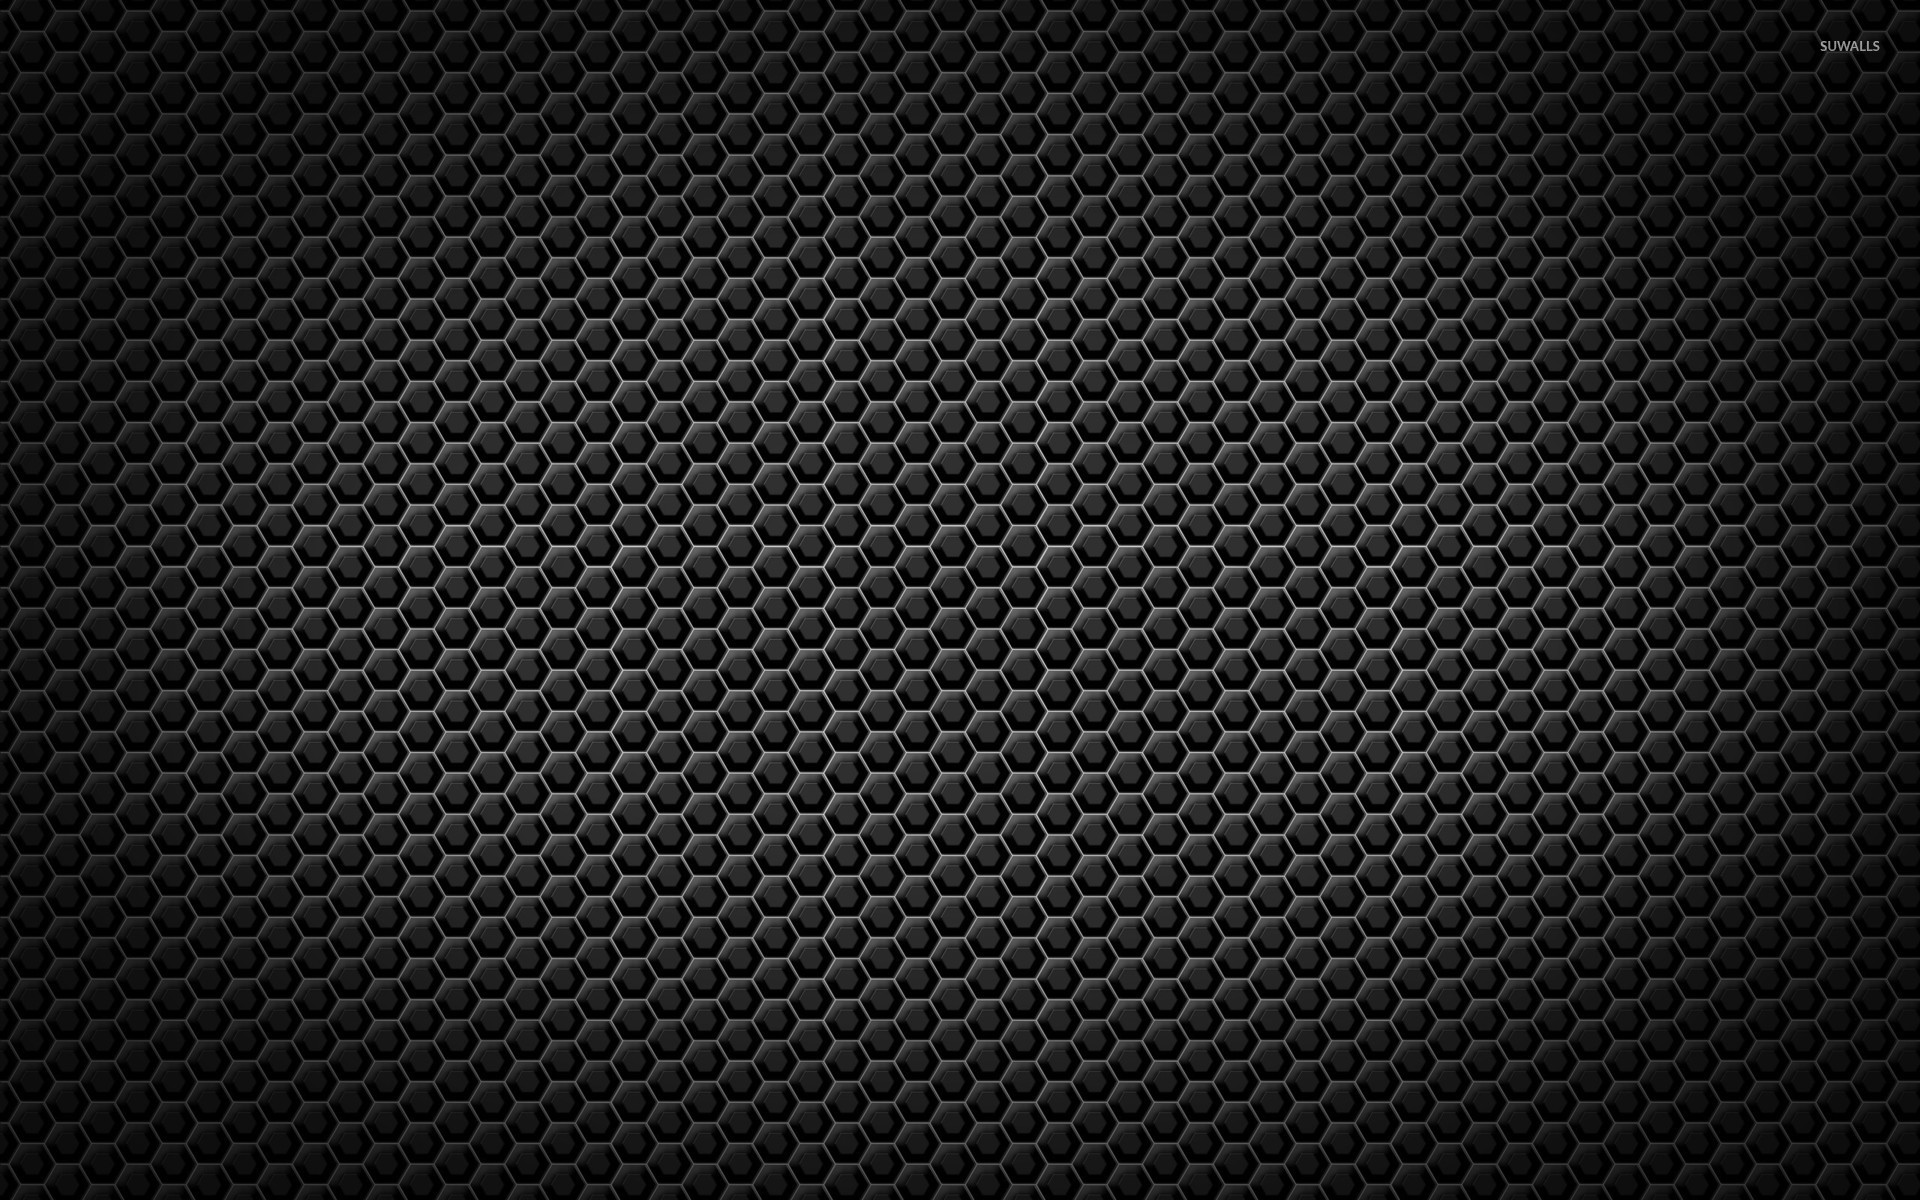 Metallic honeycomb pattern wallpaper - Abstract wallpapers - #25935